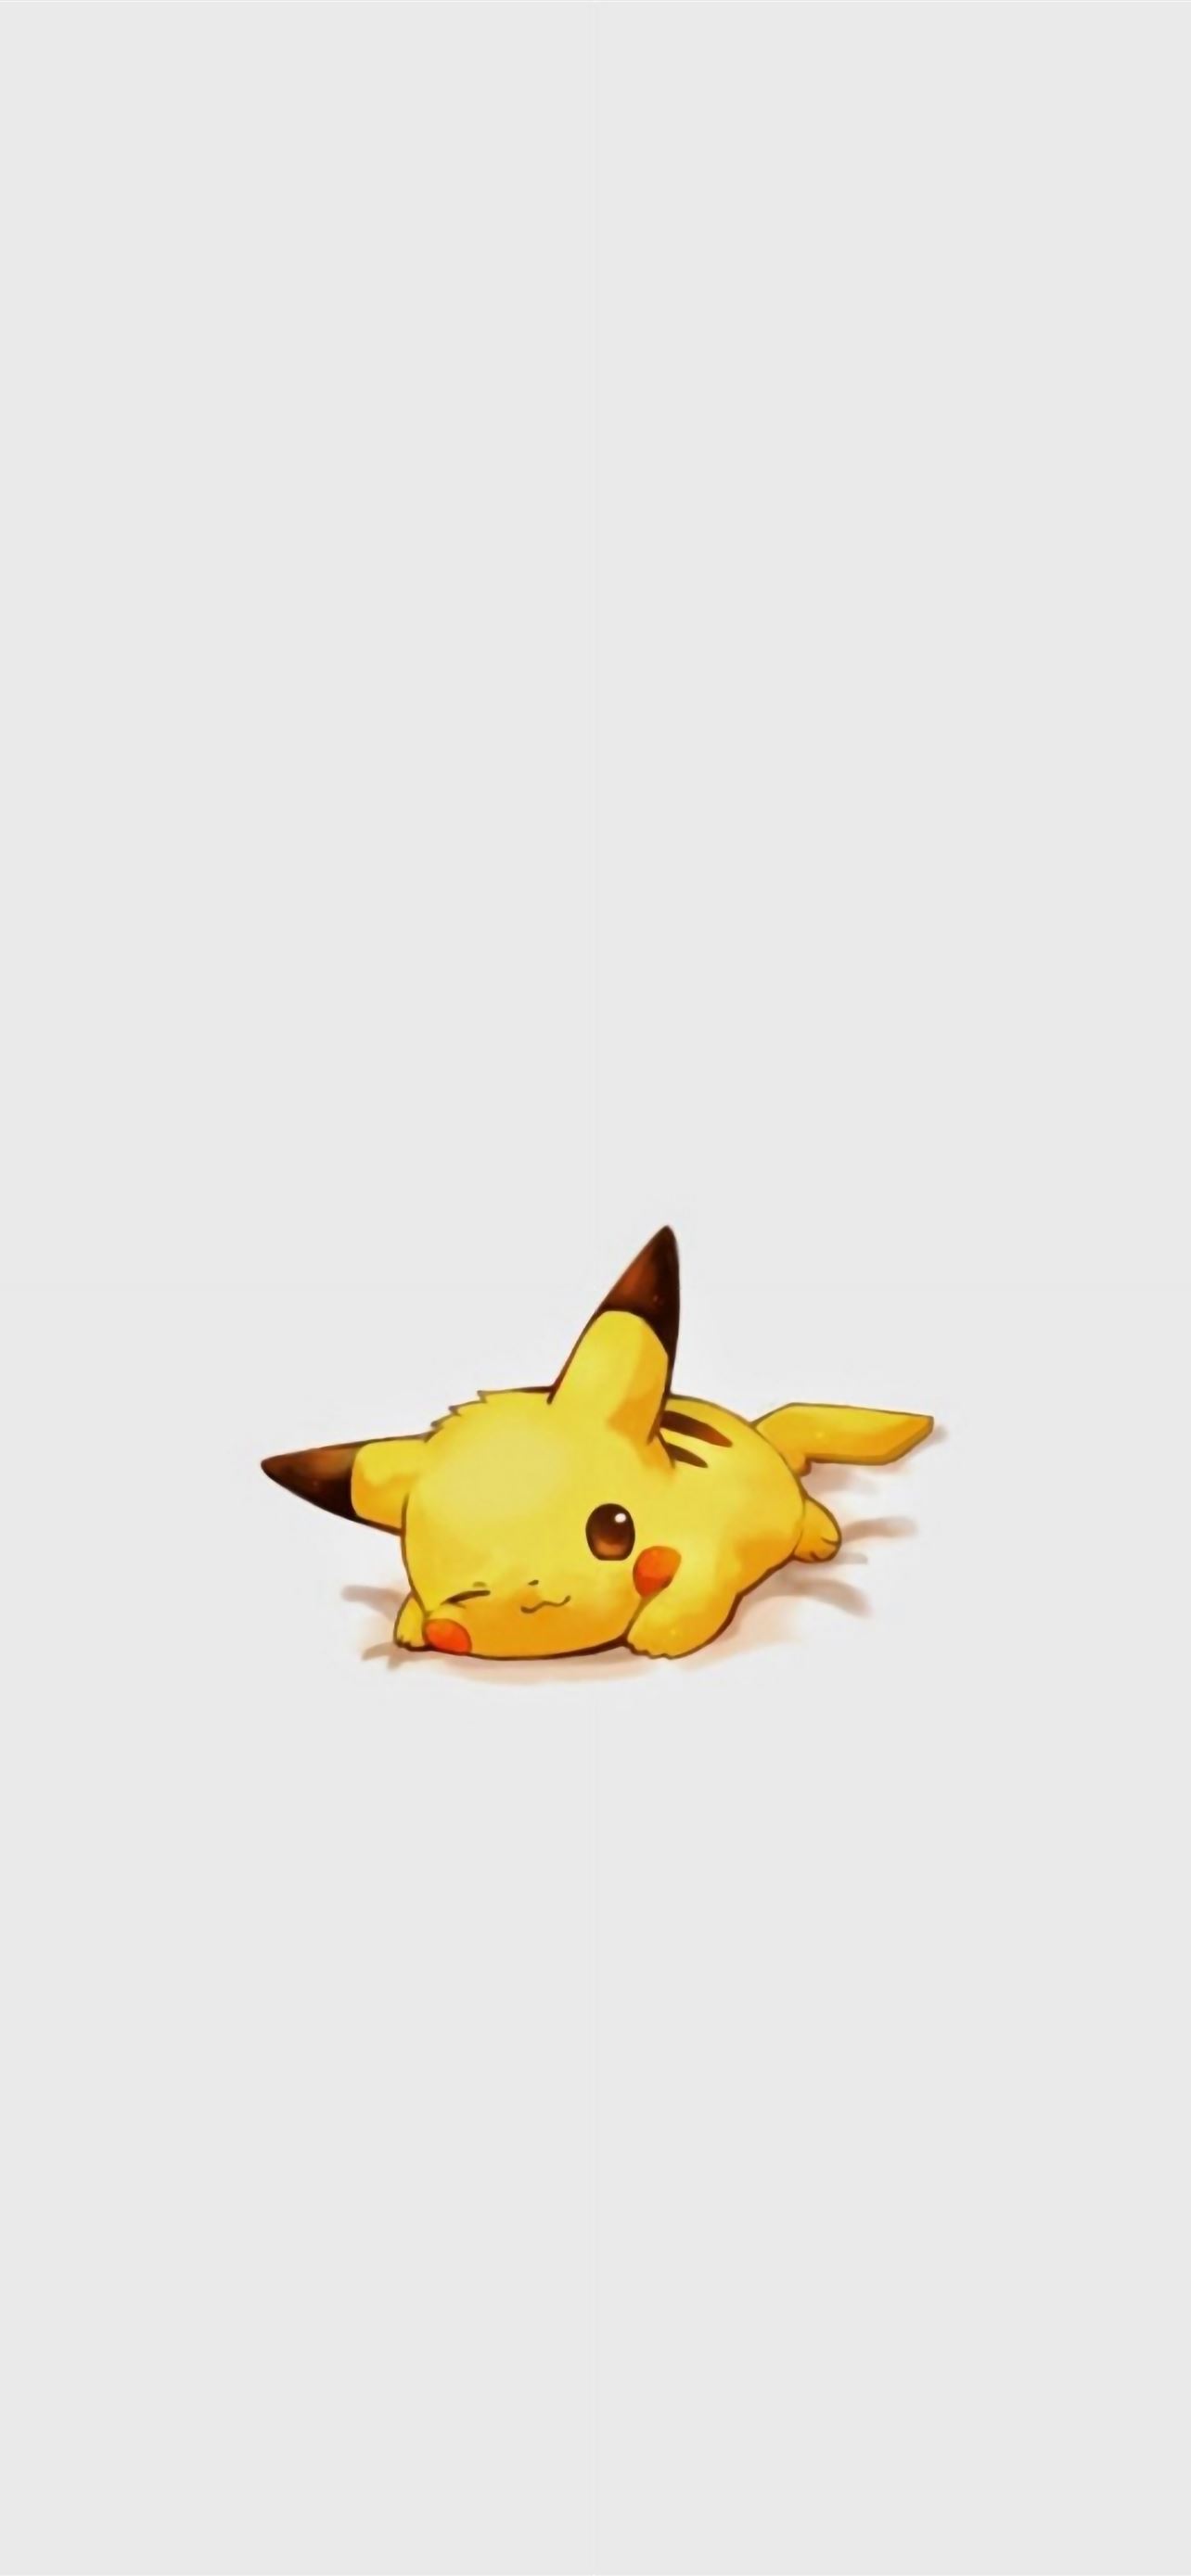 Cute Pikachu Pokemon Character iPhone Wallpaper Free Download